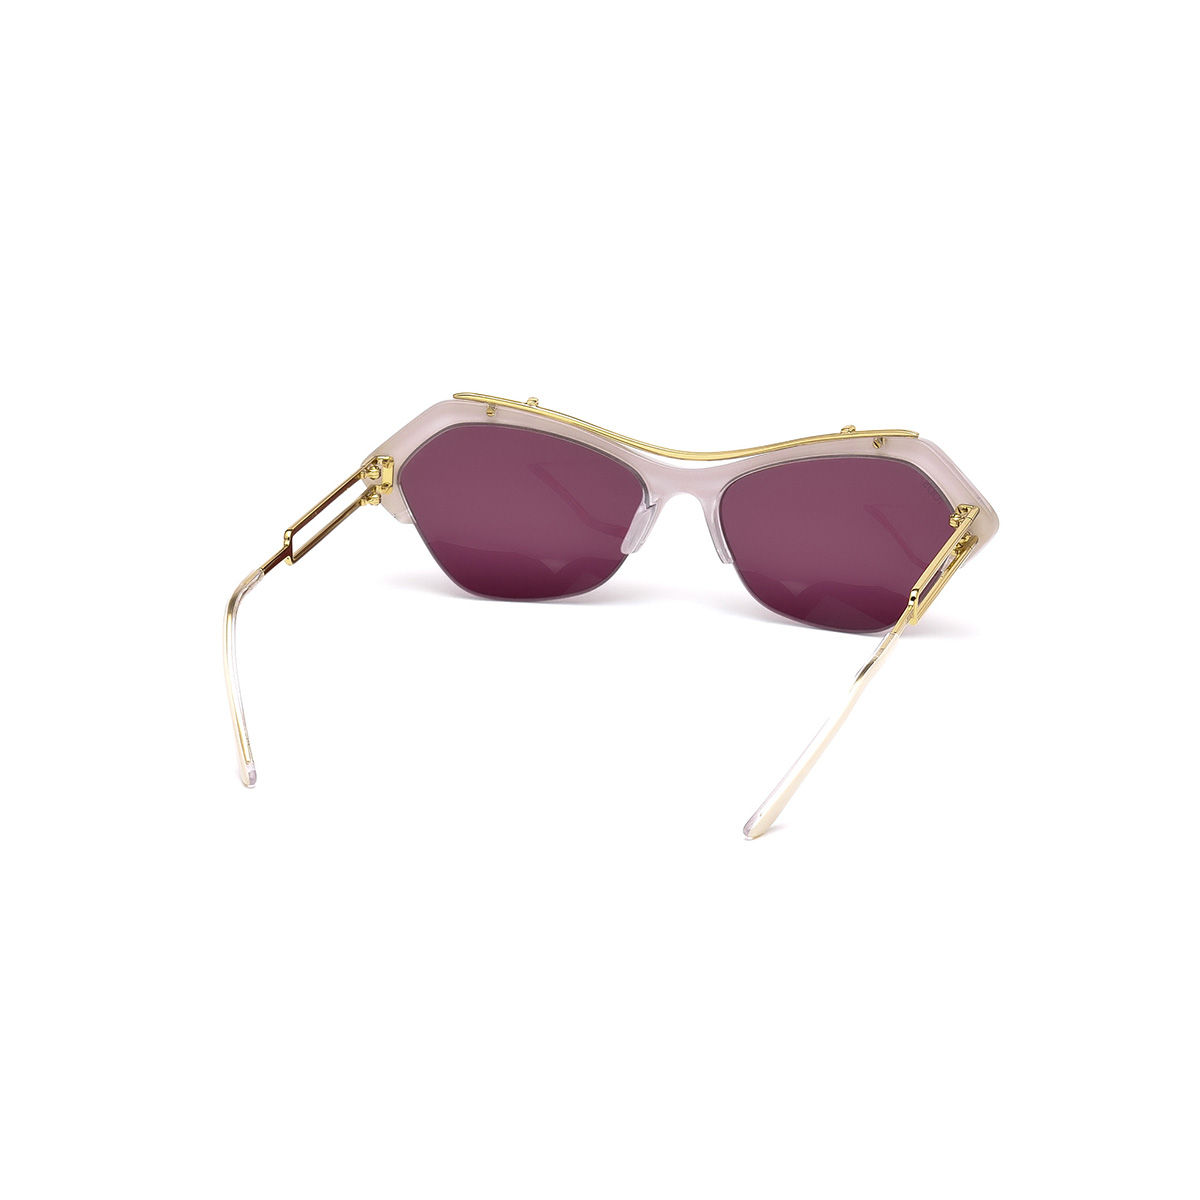 TOD'S Beige Plastic Sunglasses TO0166 56 25S: Buy TOD'S Beige Plastic ...